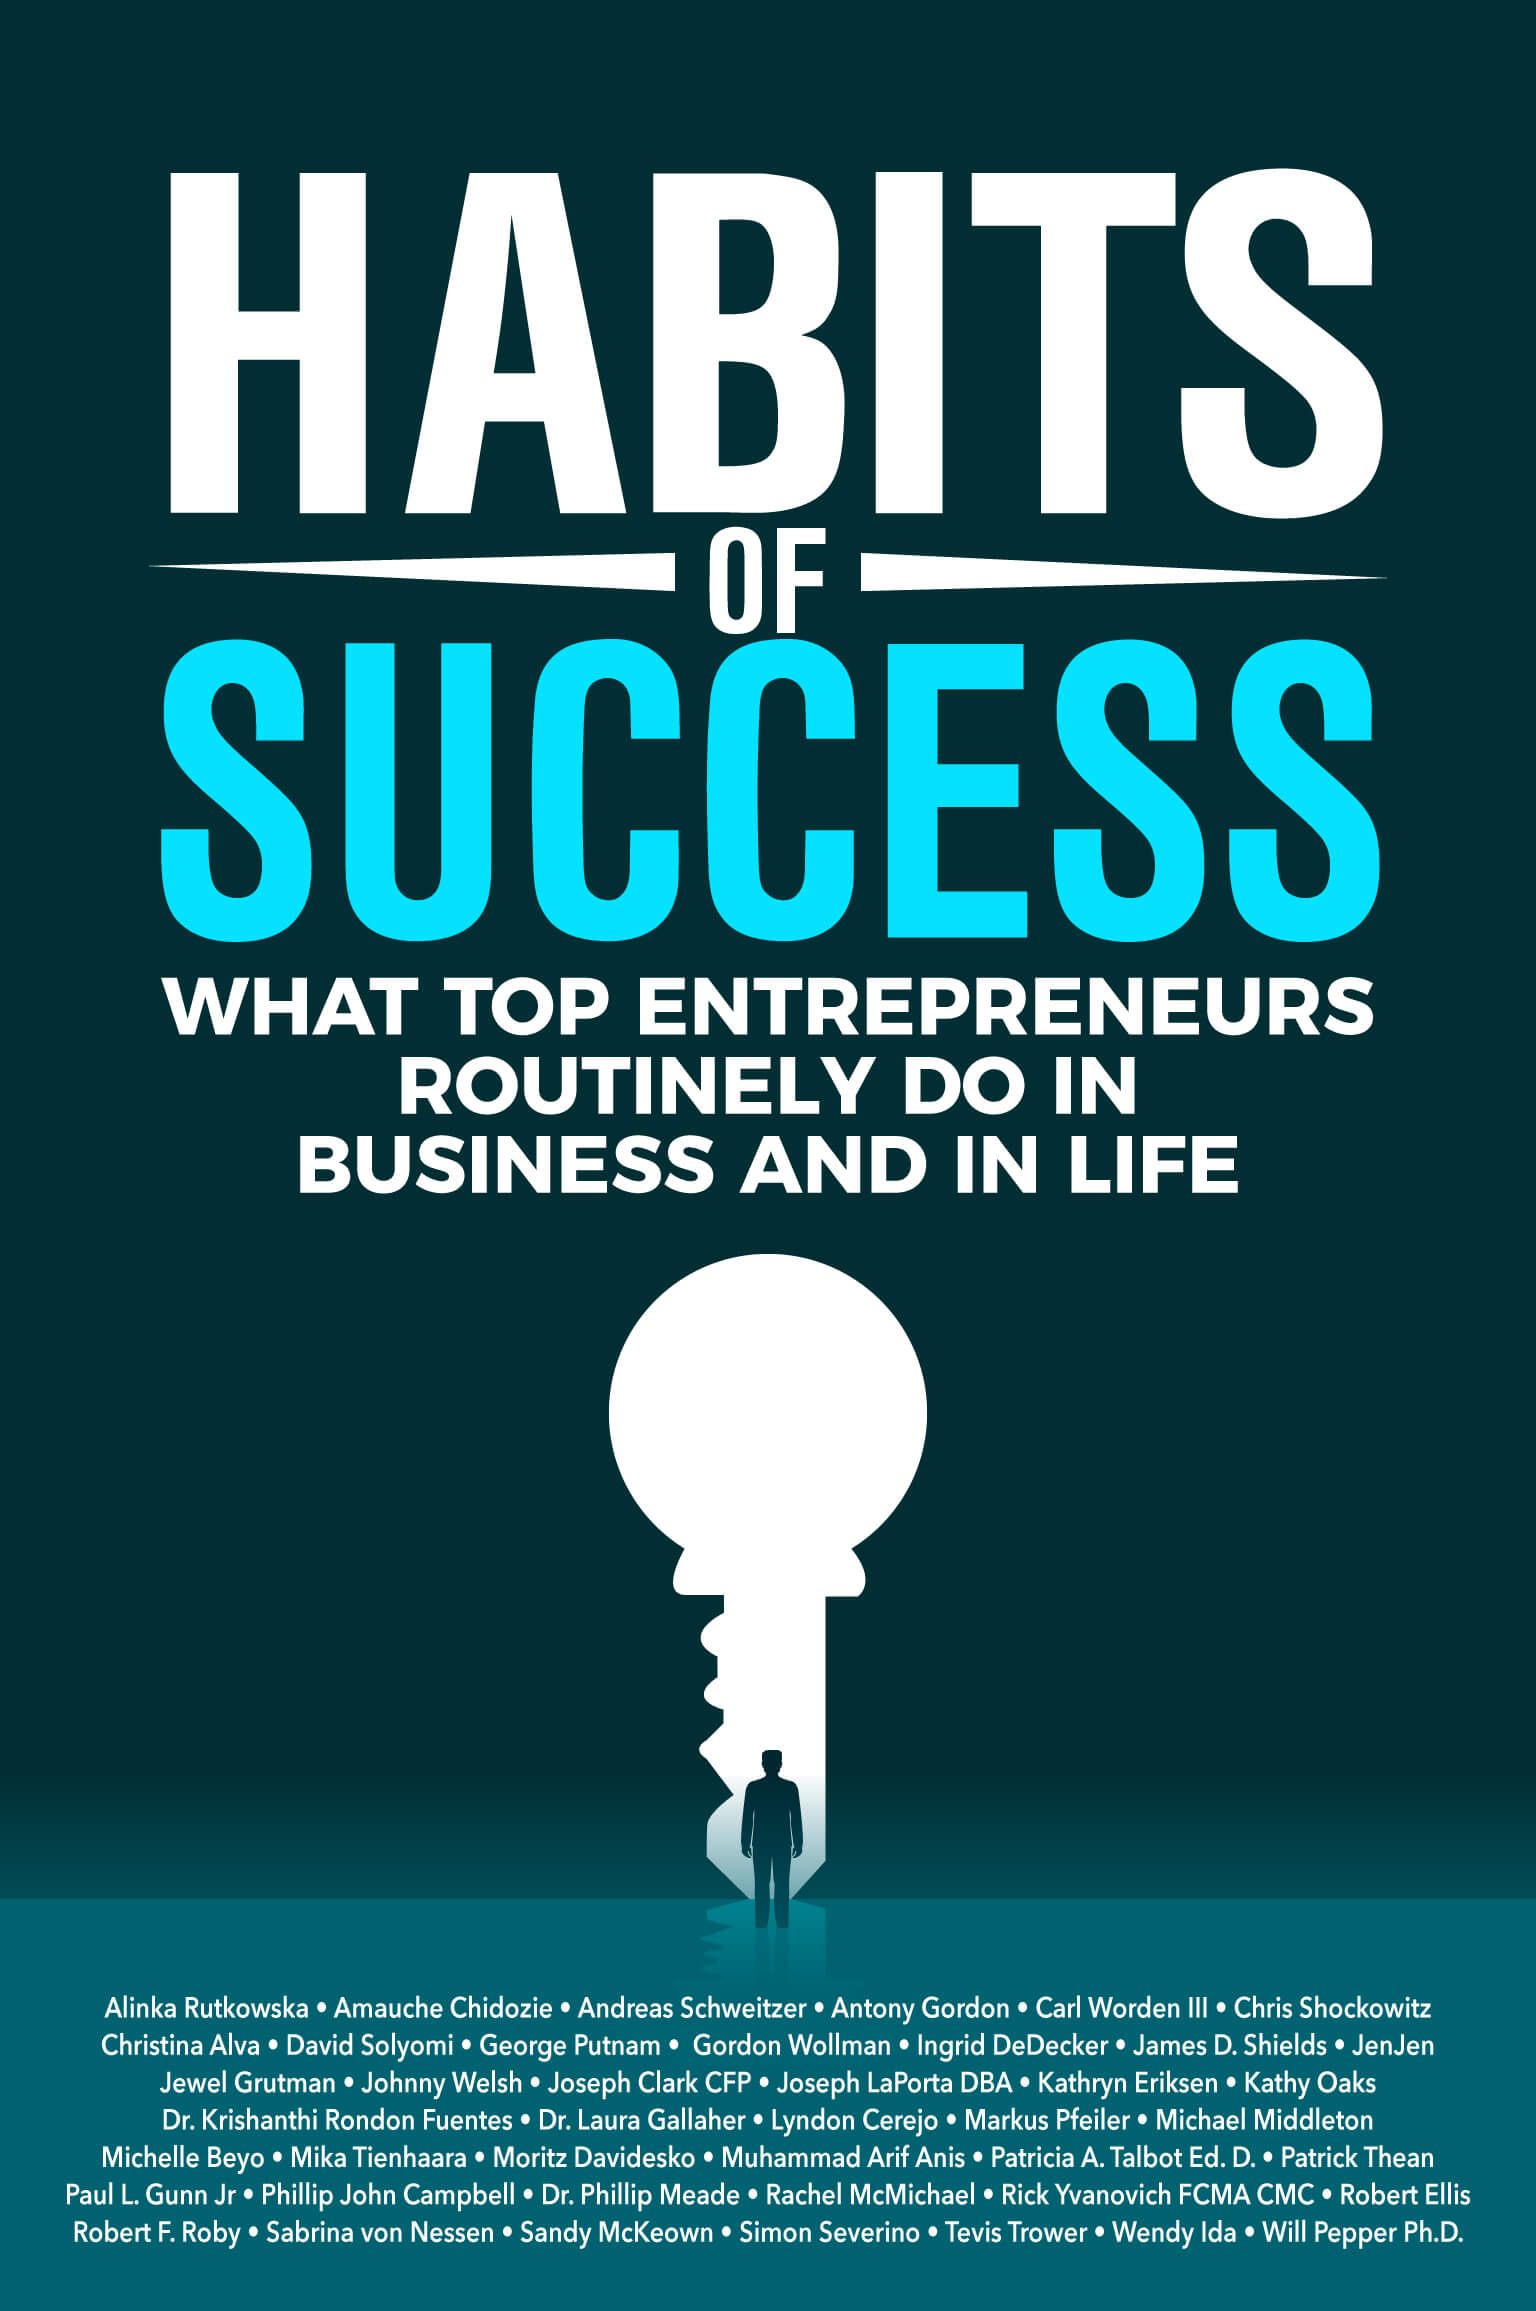 Habits of Success